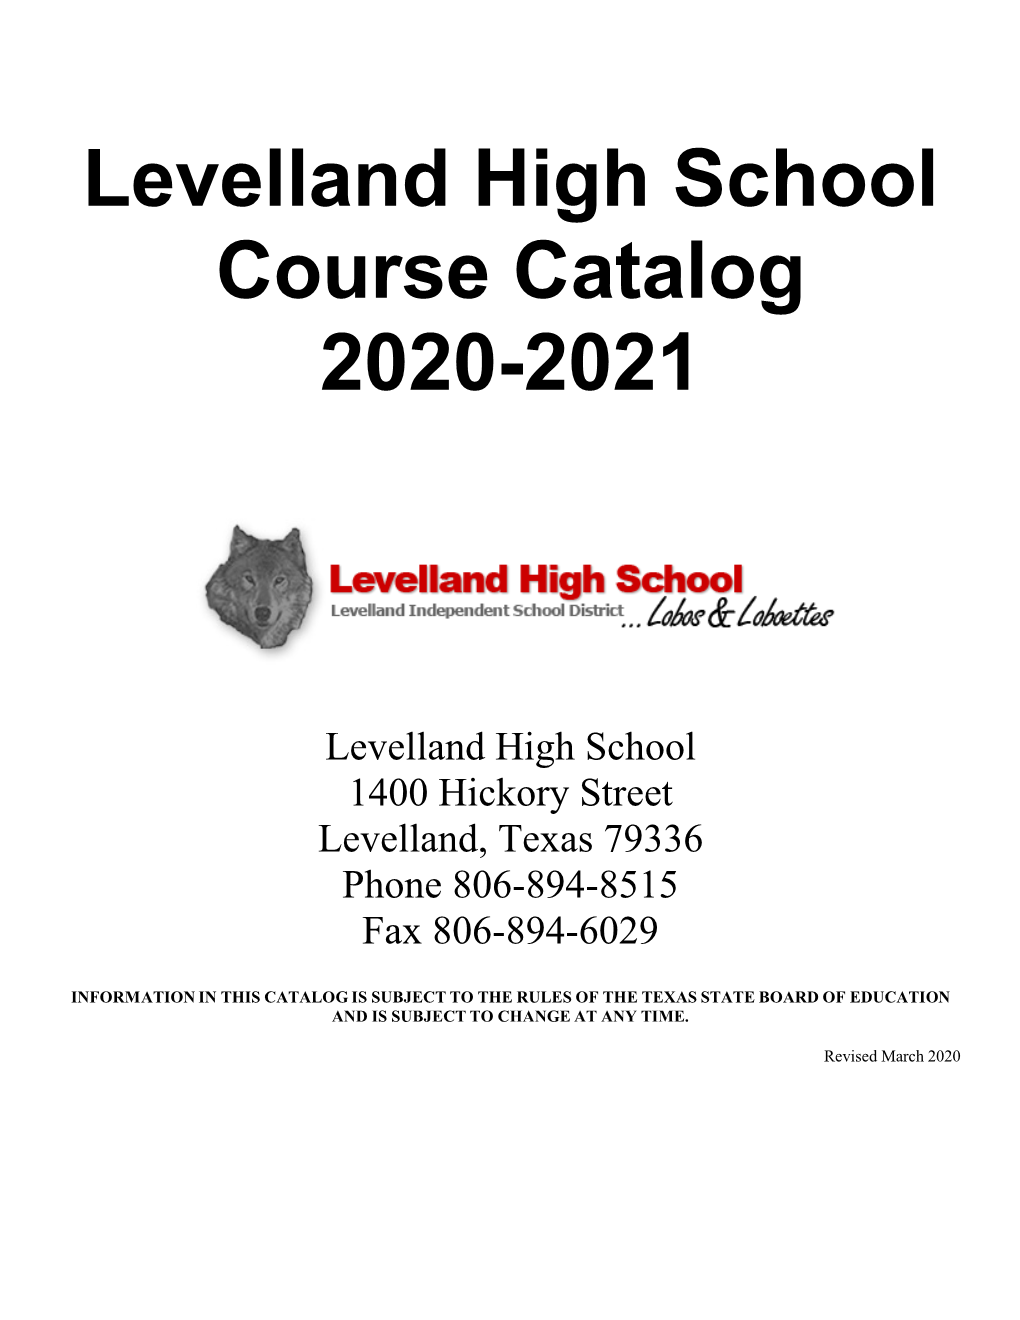 Levelland High School Course Catalog 2020-2021